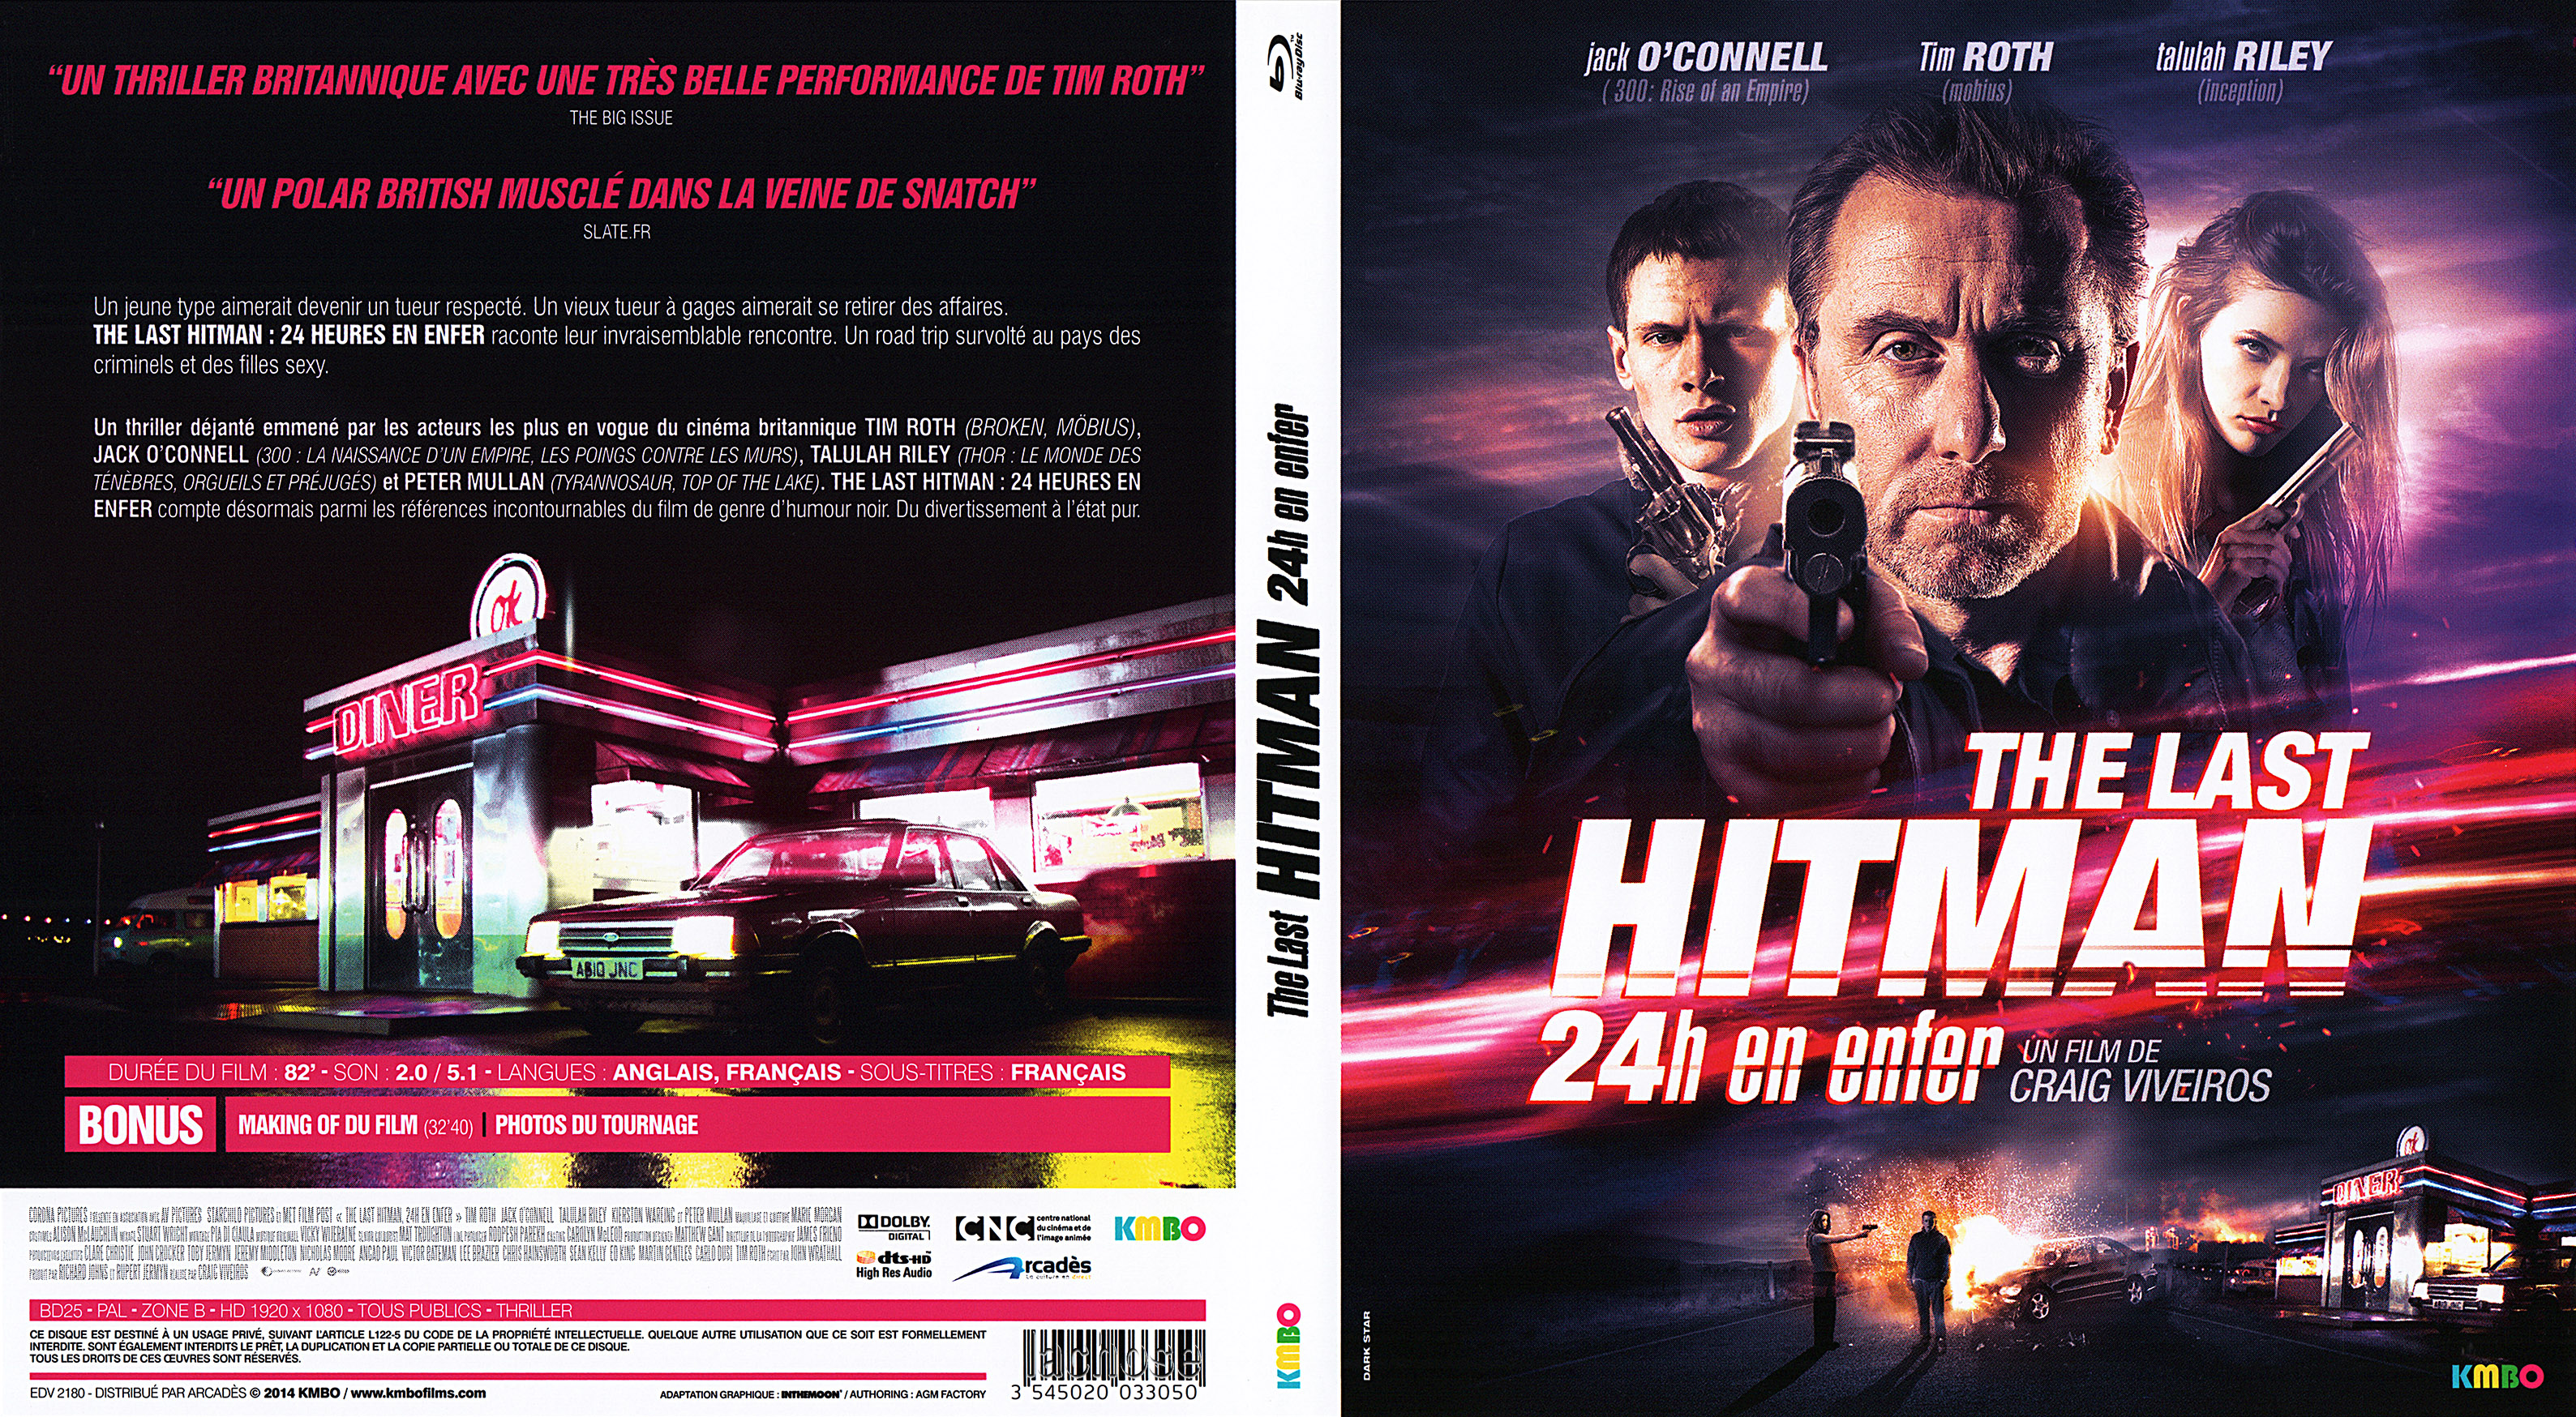 Jaquette DVD The last hitman (BLU-RAY)